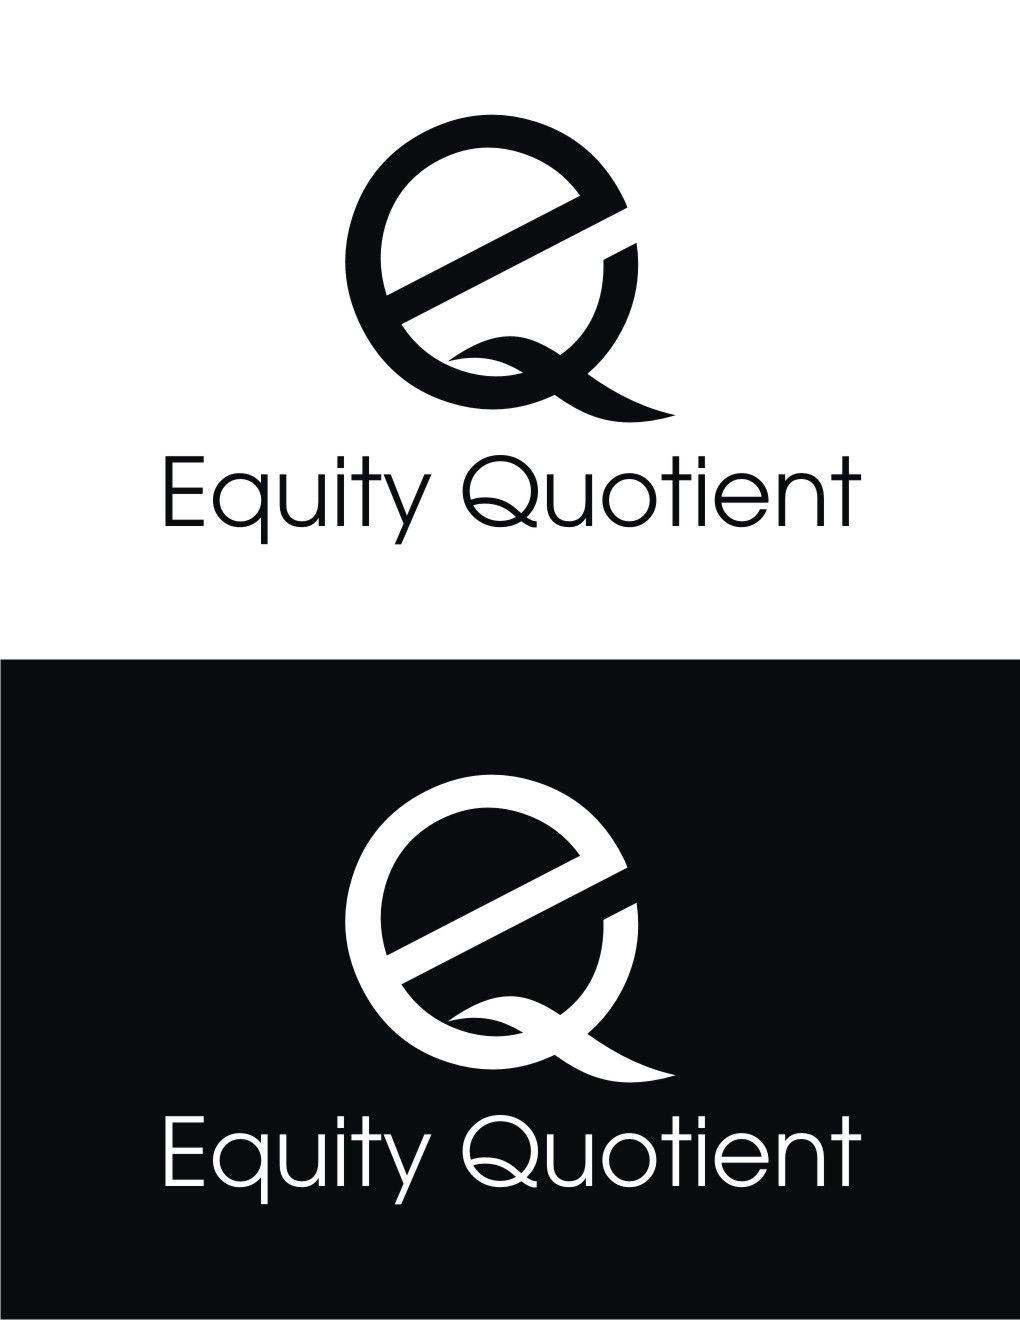 Quotient Logo - Elegant, Modern, Equity Logo Design for E.Q.= Equity Quotient